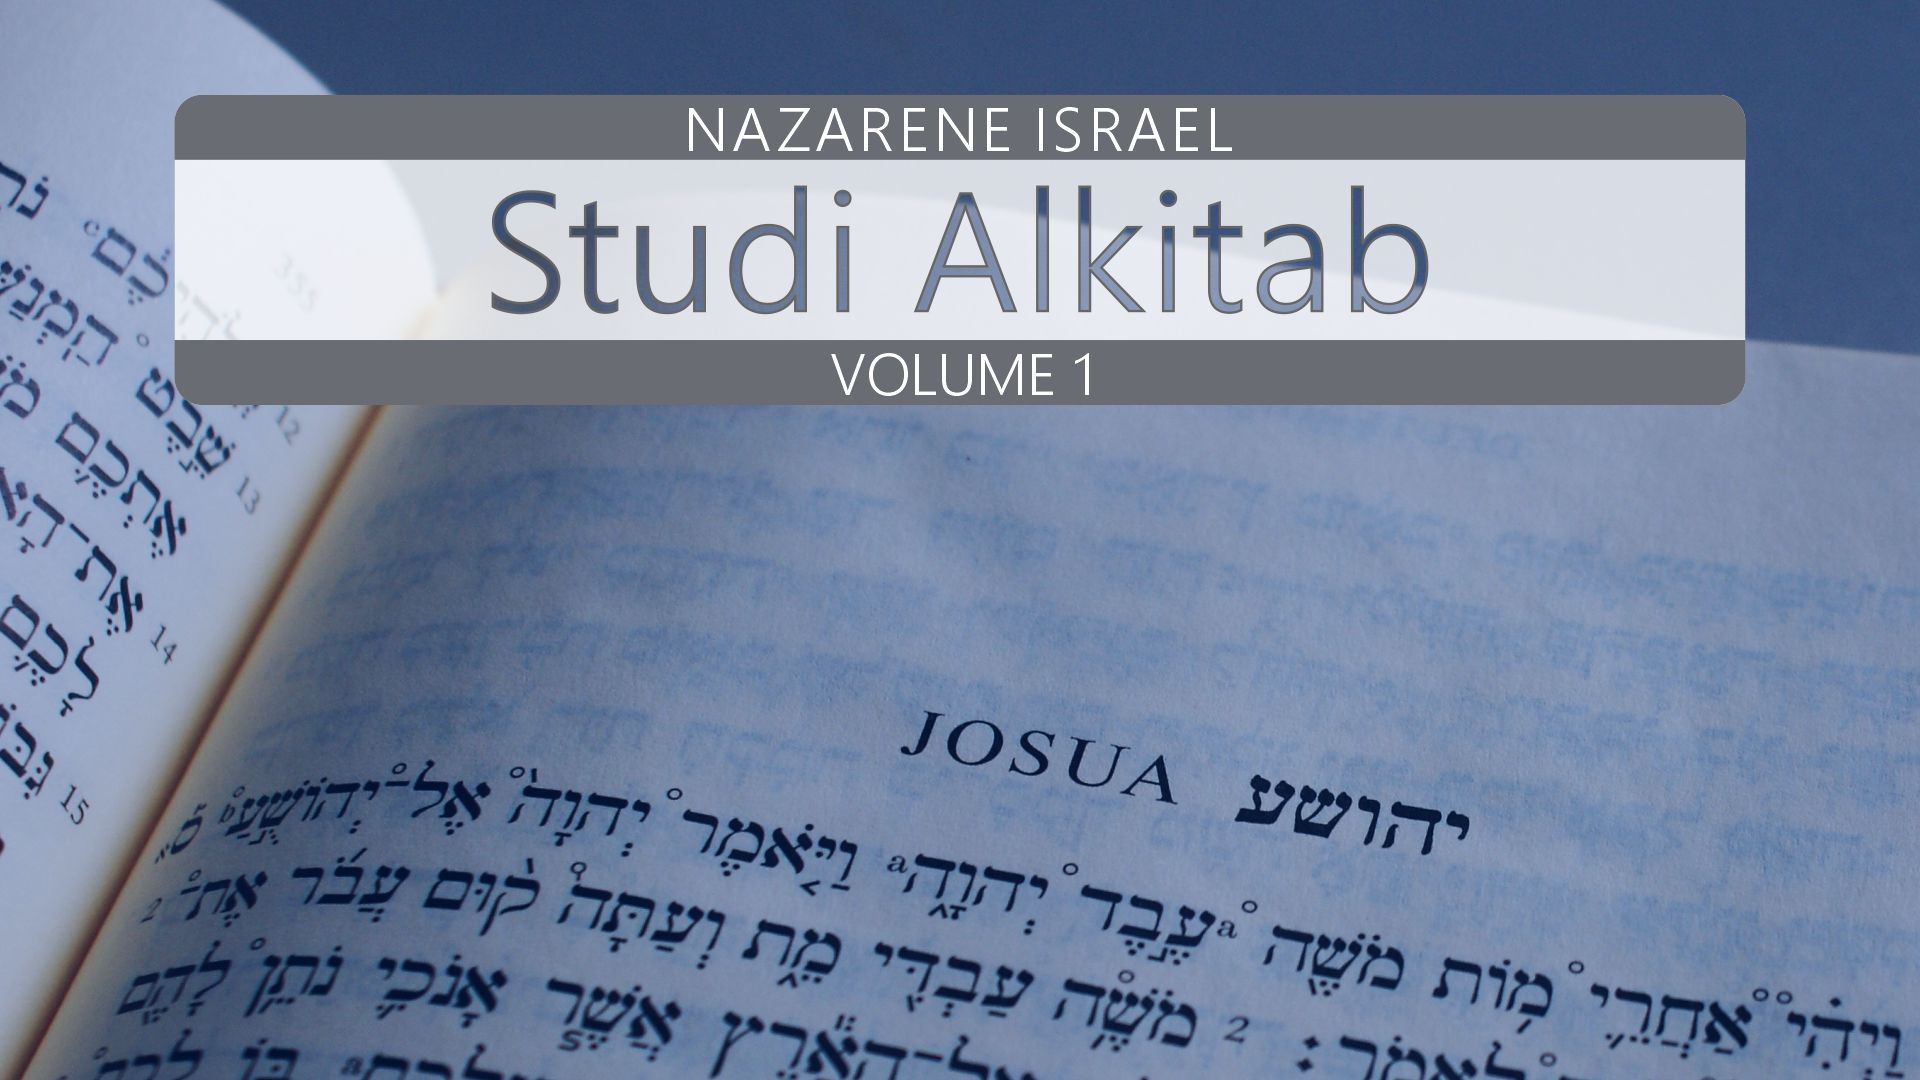 Studi Alkitab Nazaret Vol. 1